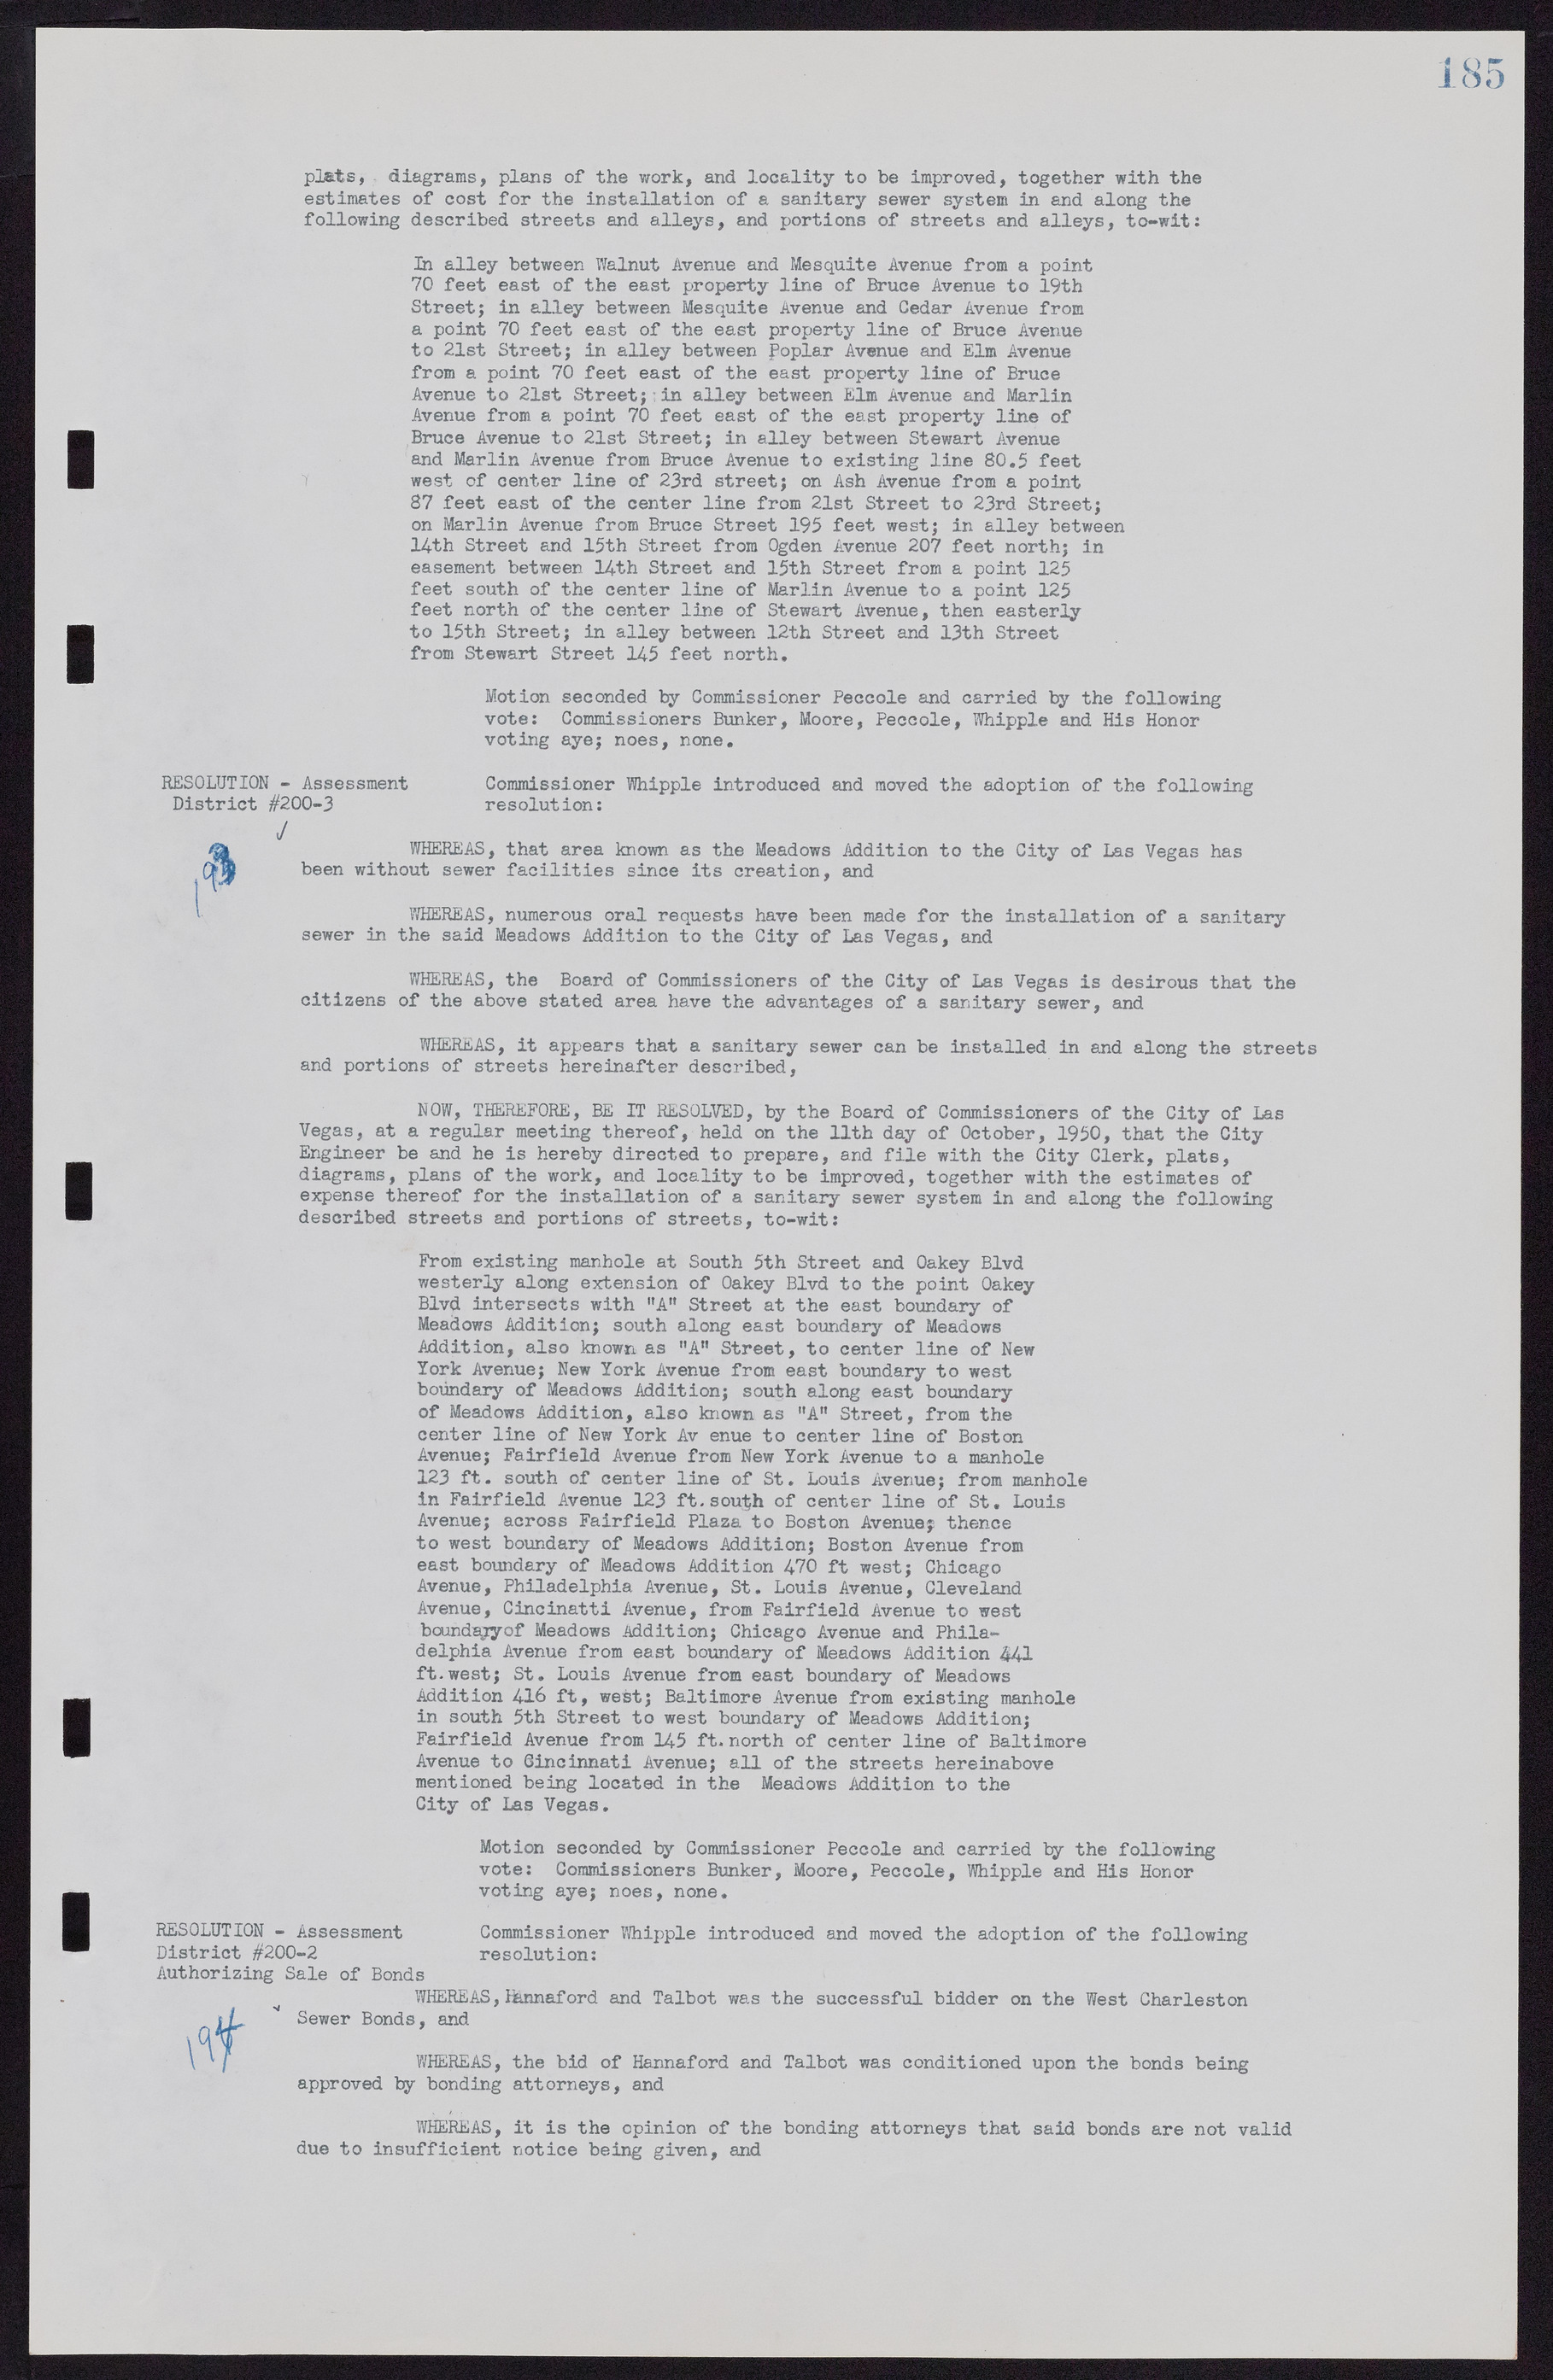 Las Vegas City Commission Minutes, November 7, 1949 to May 21, 1952, lvc000007-195